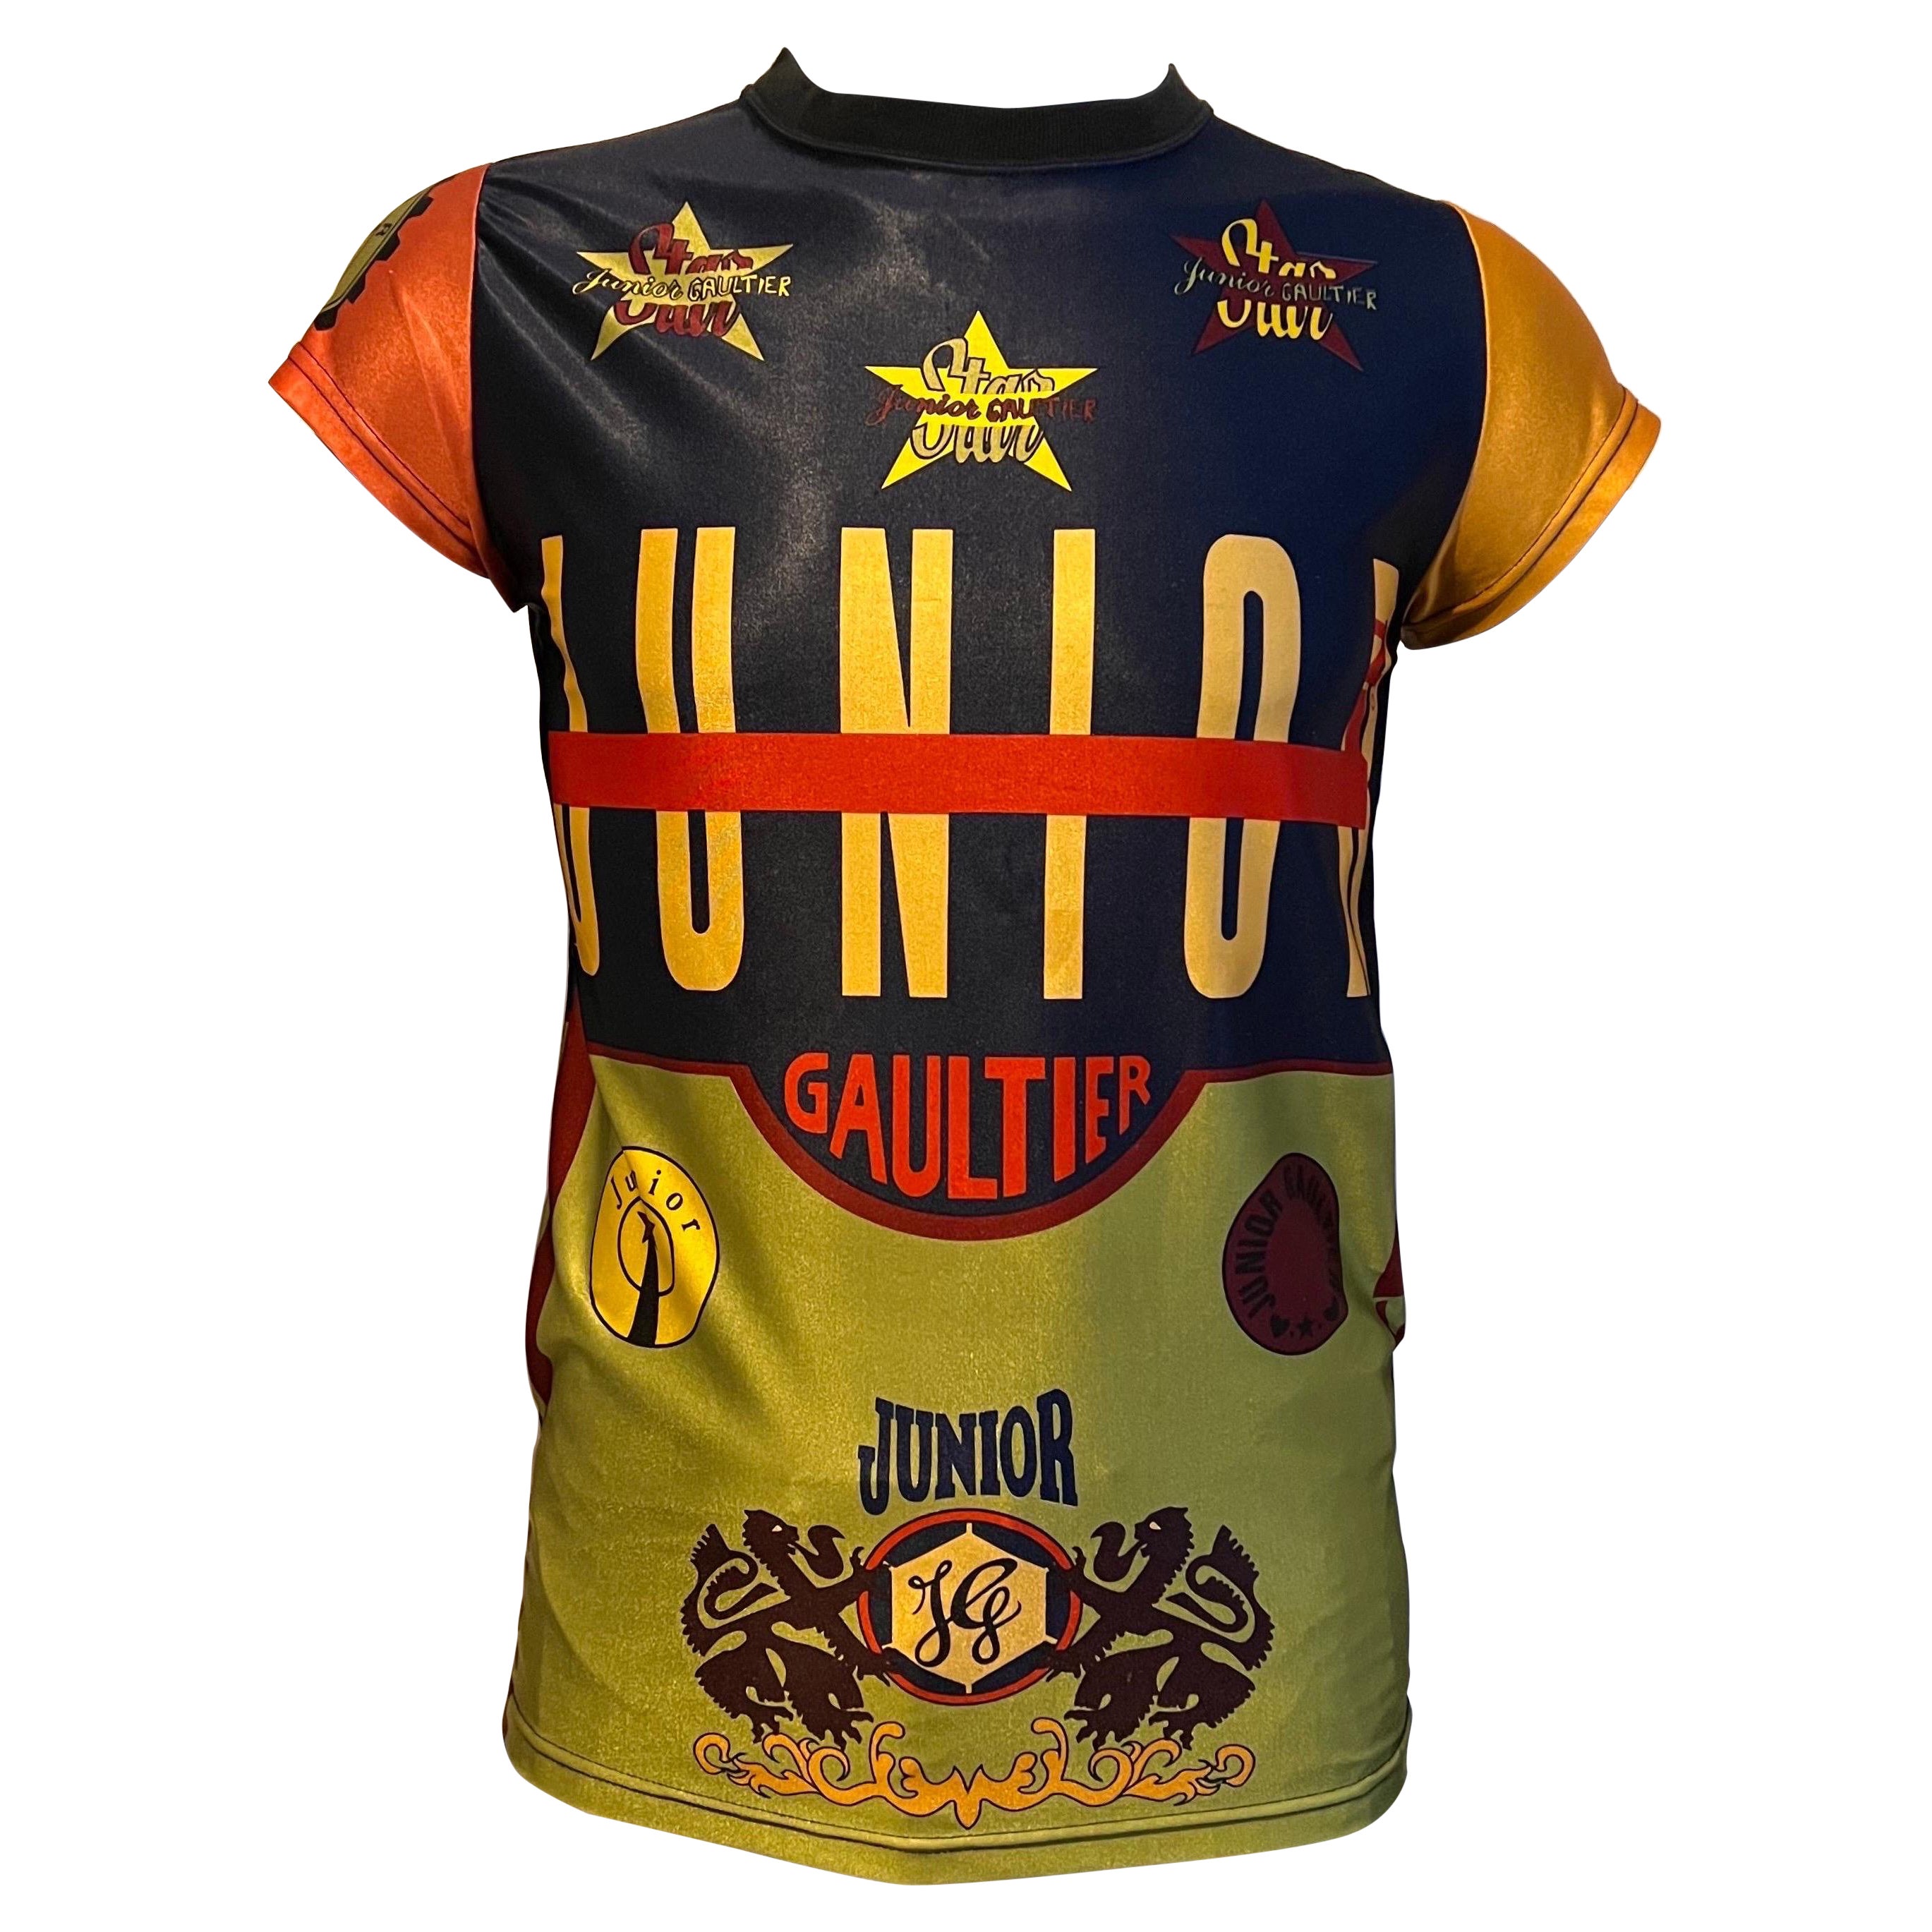 Vintage 1990’s Junior Gaultier iconic multicoloured graphic logo tee shirt 